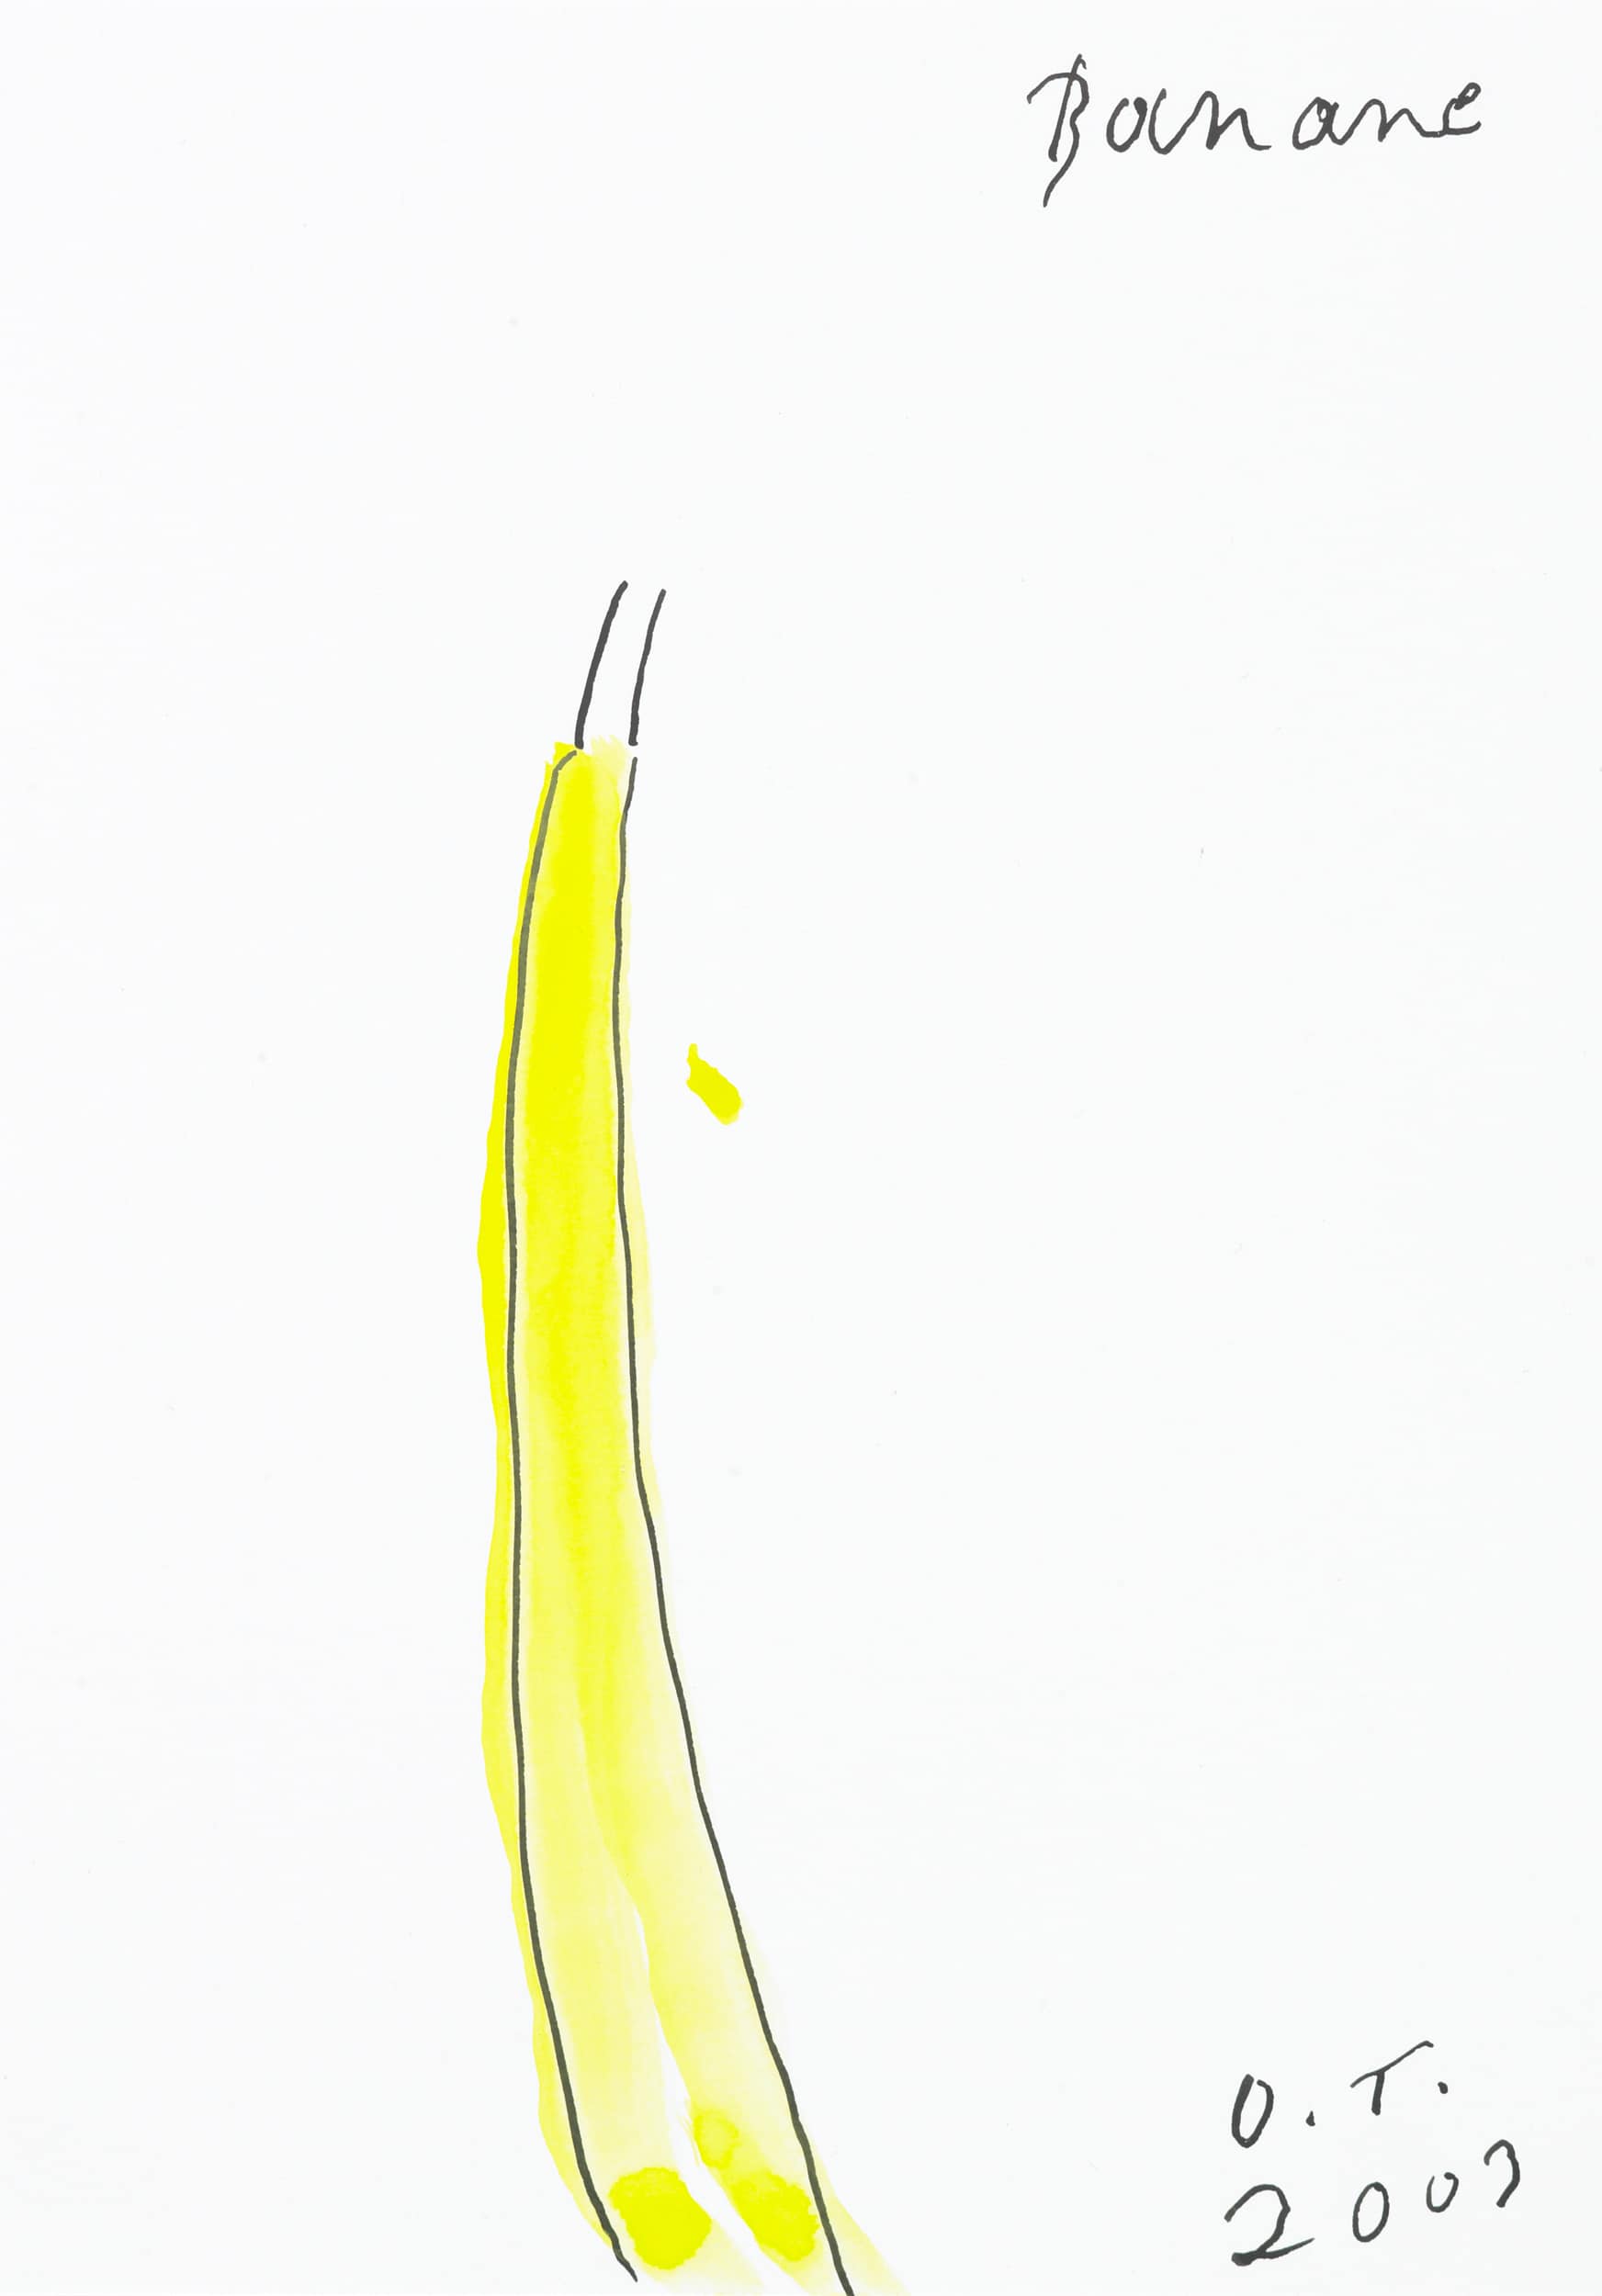 tschirtner oswald - Banane / Banana